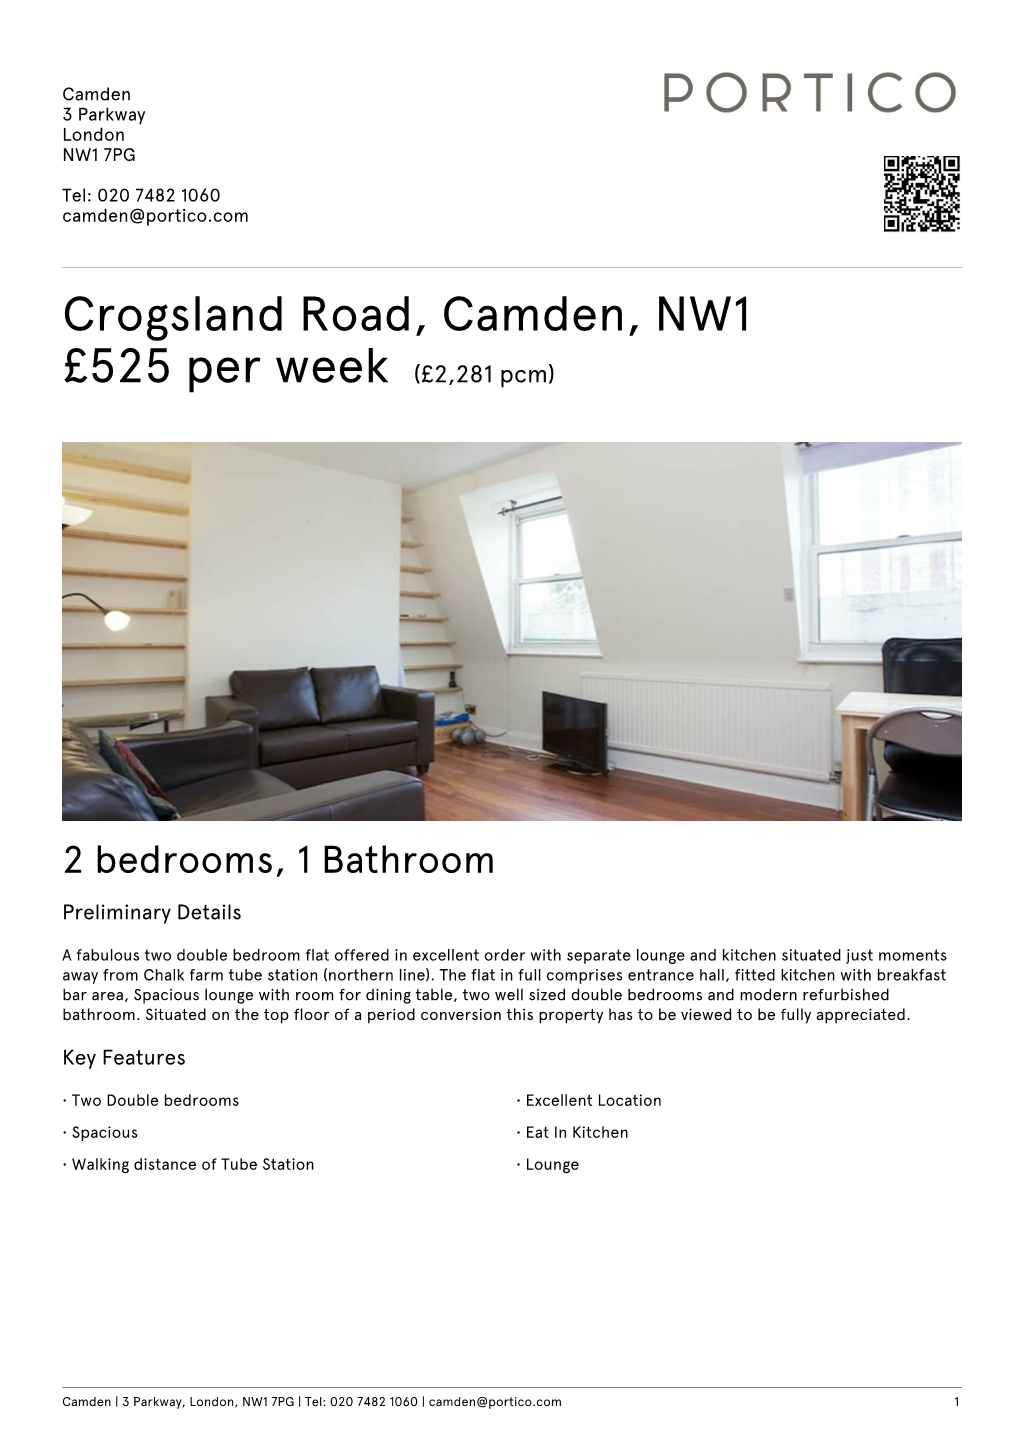 Crogsland Road, Camden, NW1 £525 Per Week